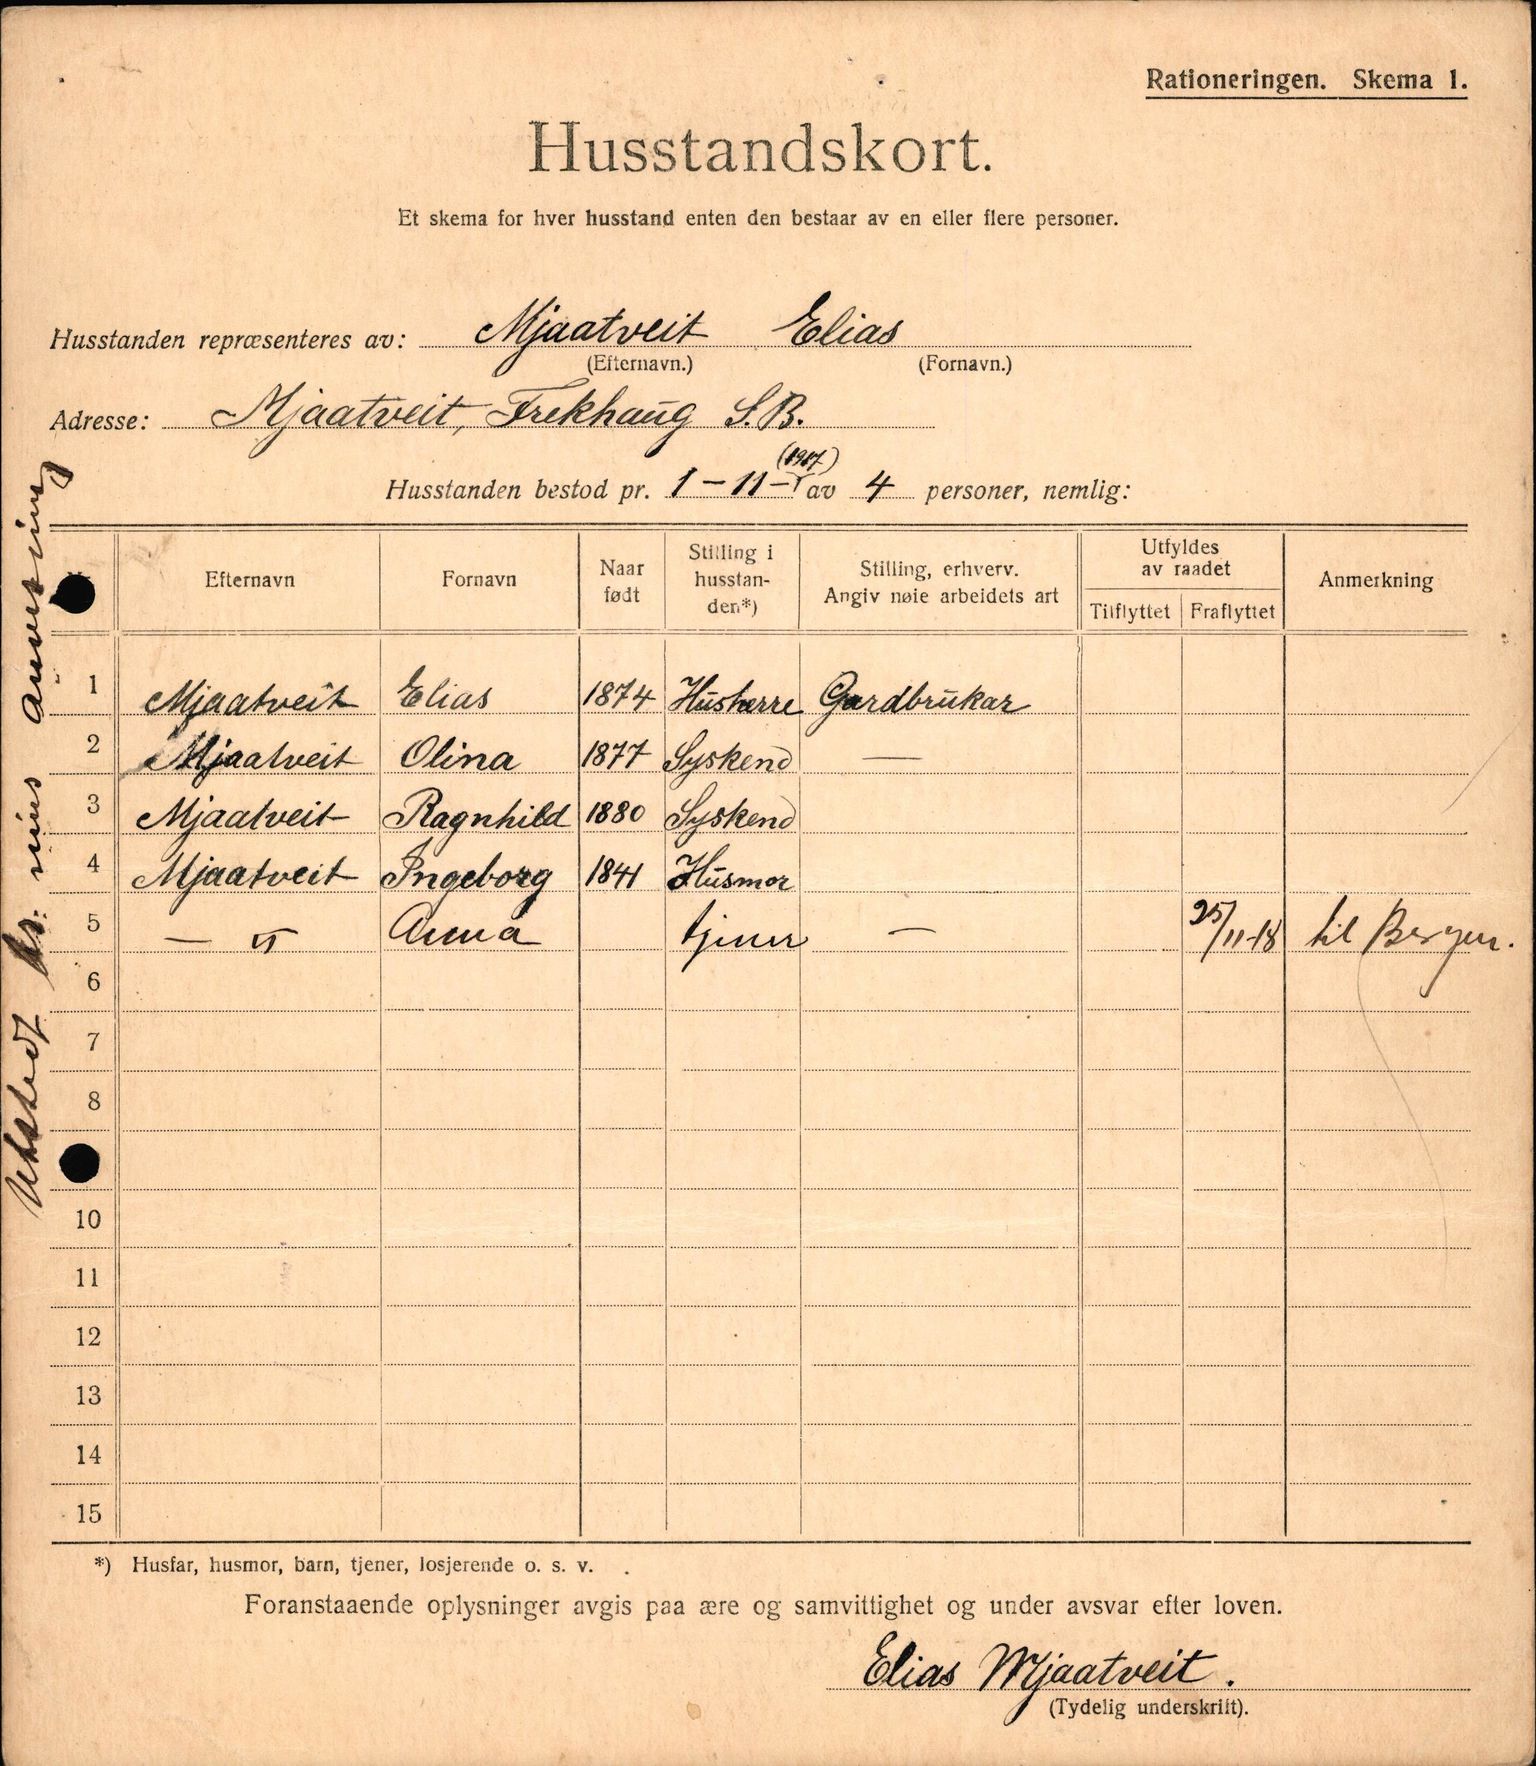 IKAH, Meland kommune, Provianteringsrådet, Husstander per 01.11.1917, 1917-1918, s. 243